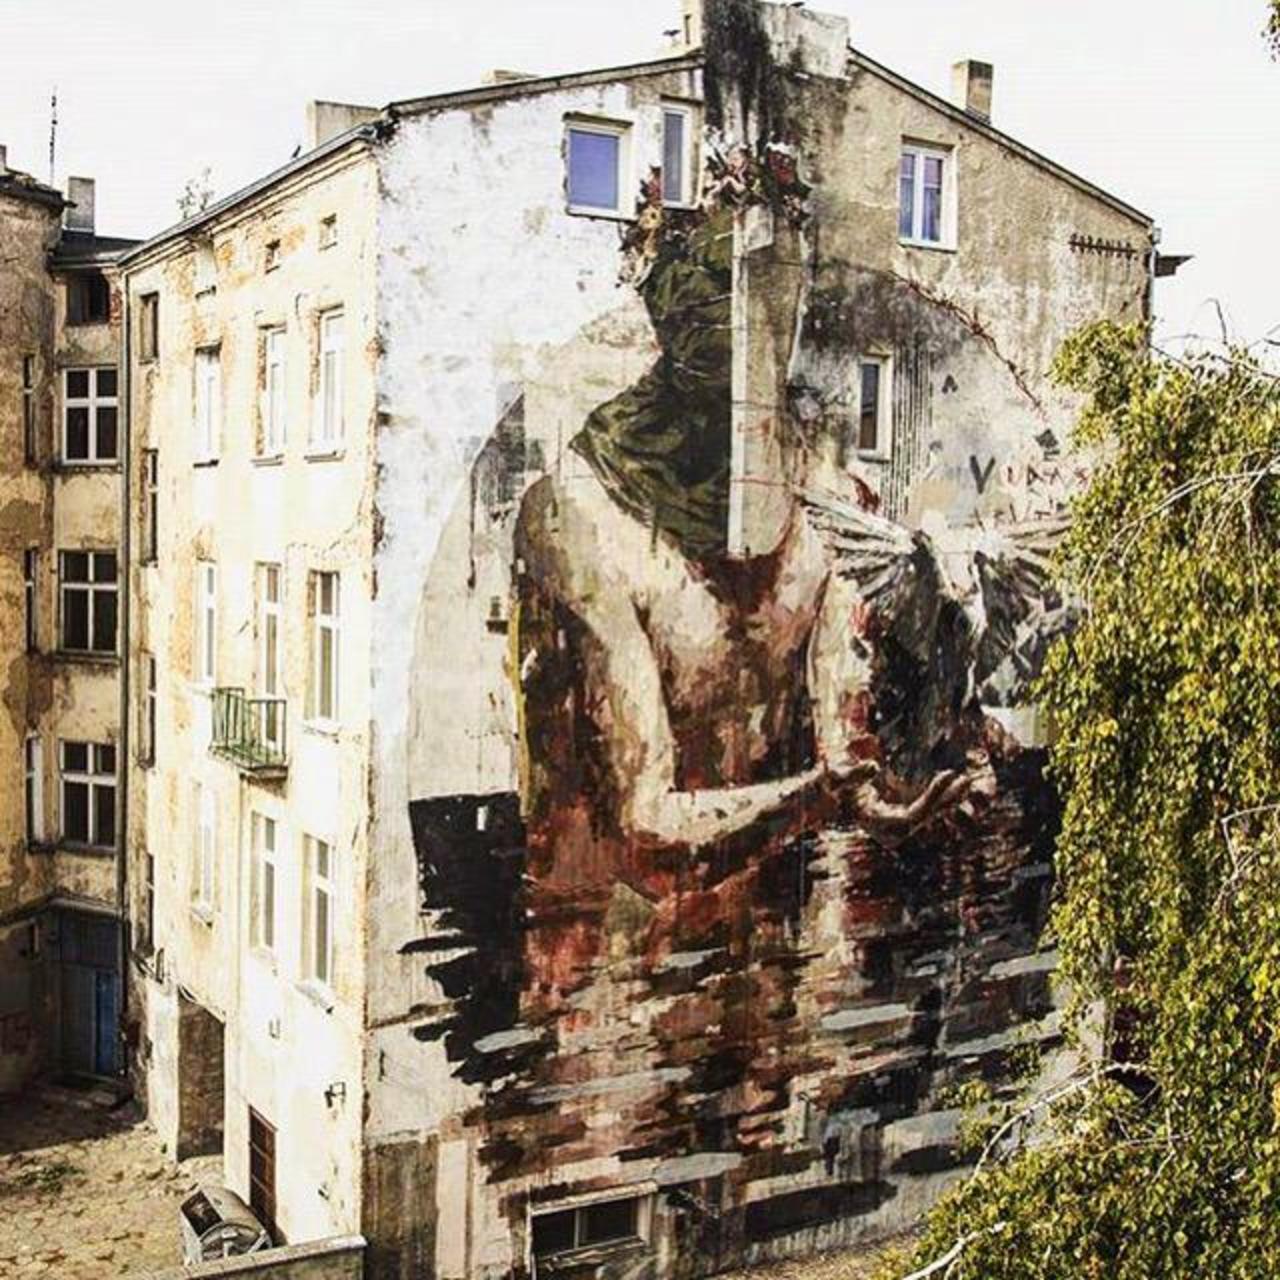 Incredible! RT @allcitycanvas: The great #Borondo for @lodzmurals in Lodz, #Poland #streetart #graffiti #art http://t.co/8OWXW5SO4l